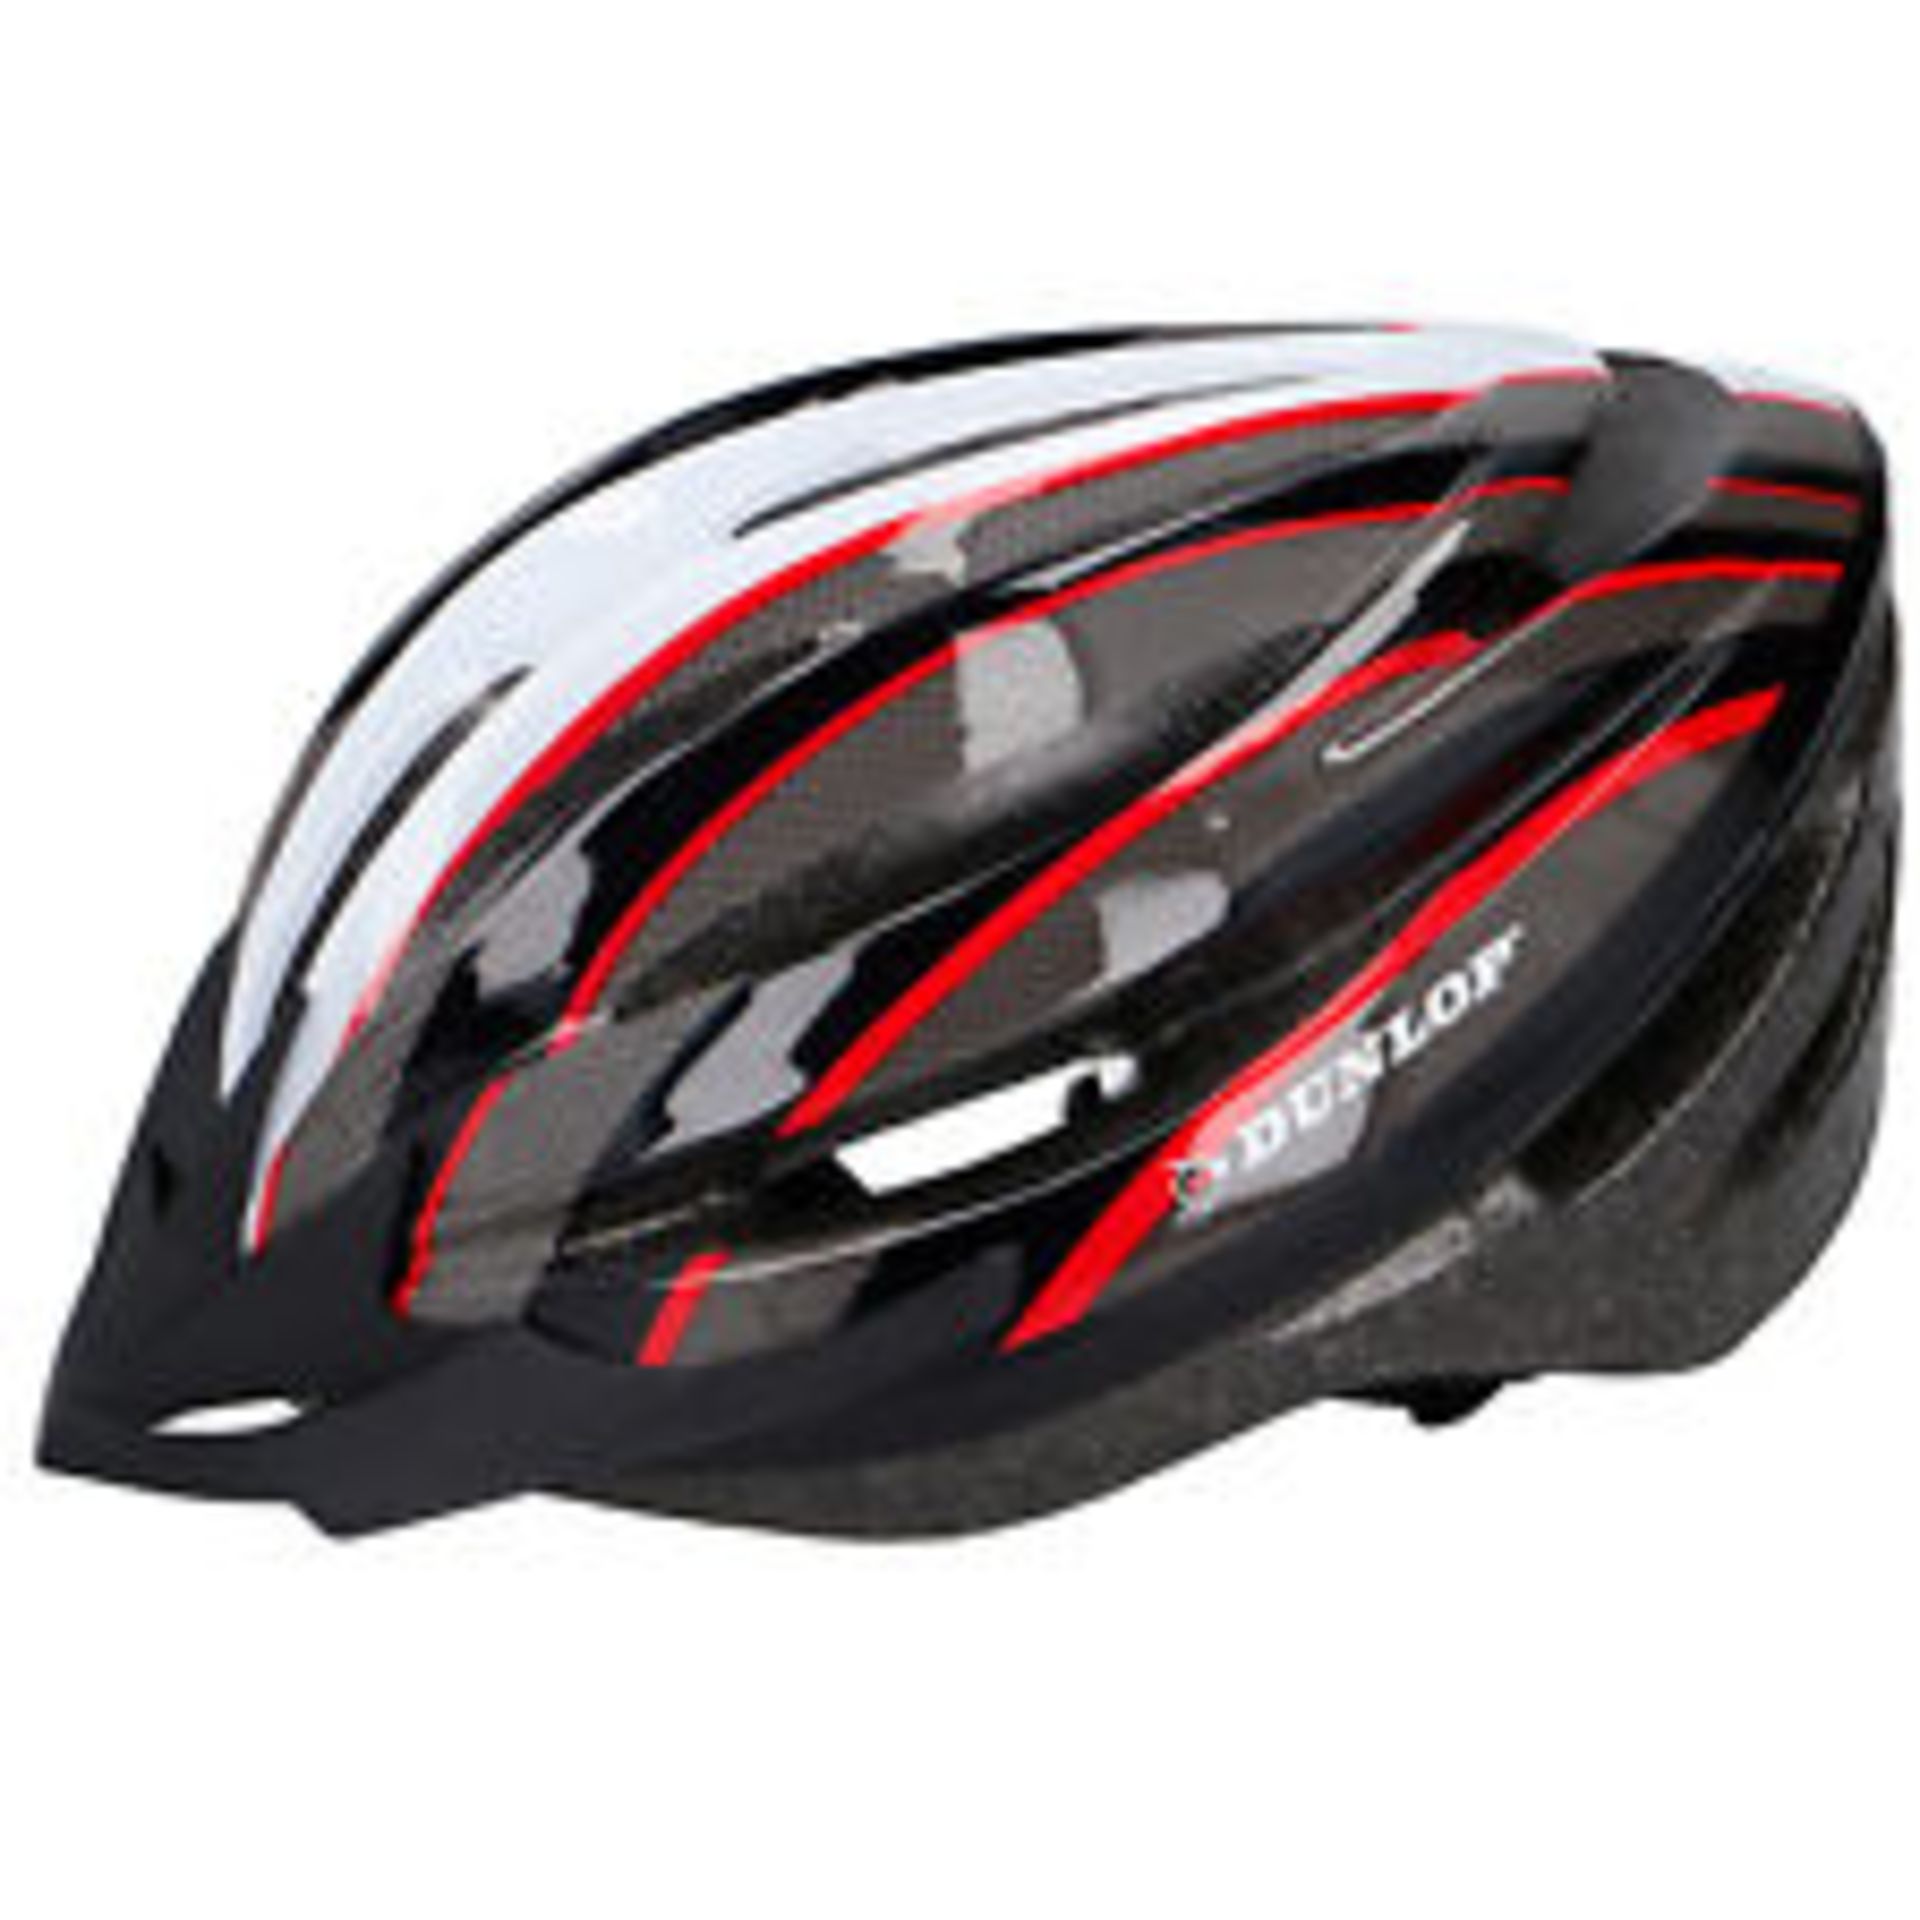 + VAT Brand New Dunlop Bicycle Helmet Inc Lightweight & Removable Visor - Size L 58-61cm - Similar